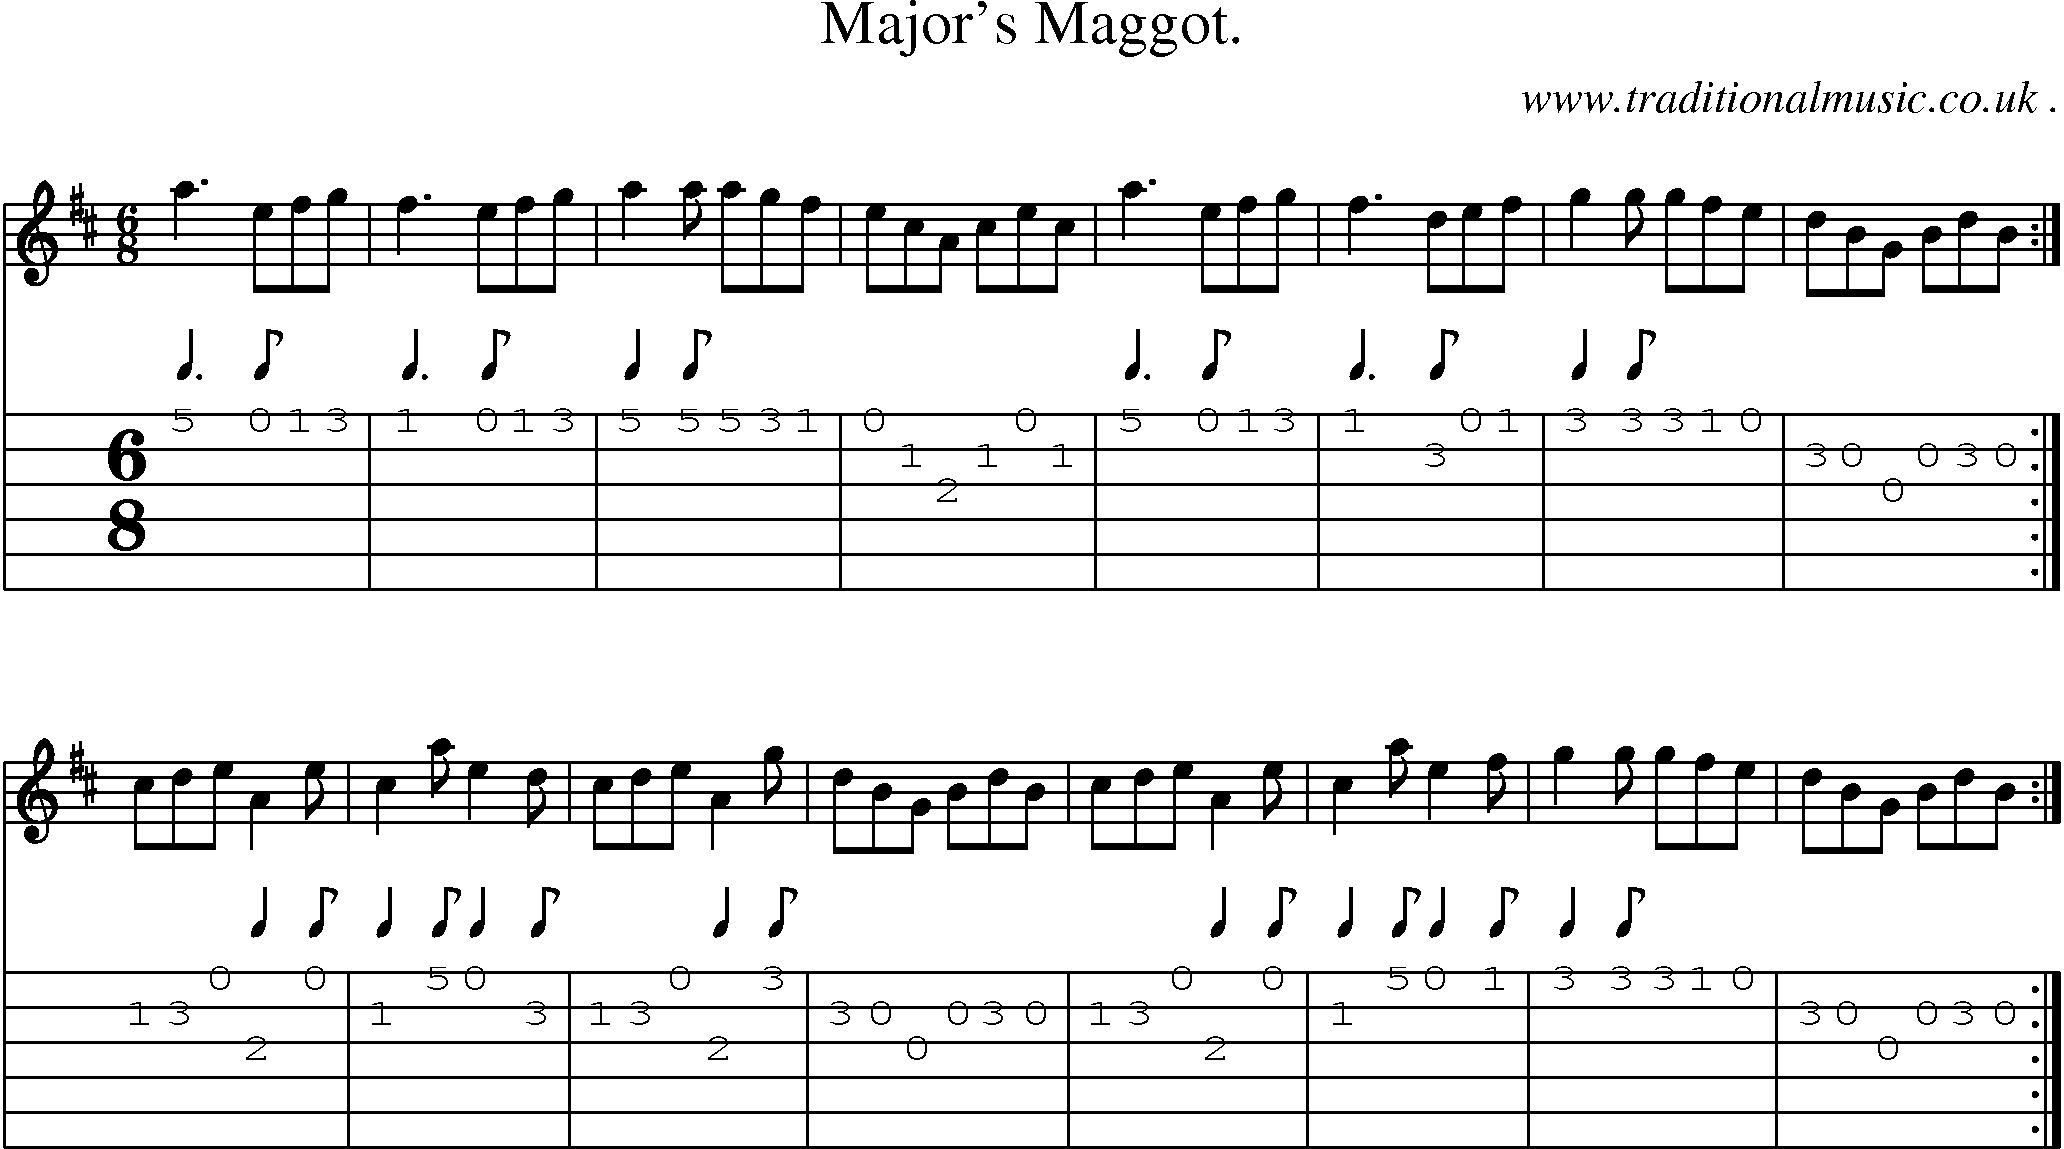 Sheet-Music and Guitar Tabs for Majors Maggot